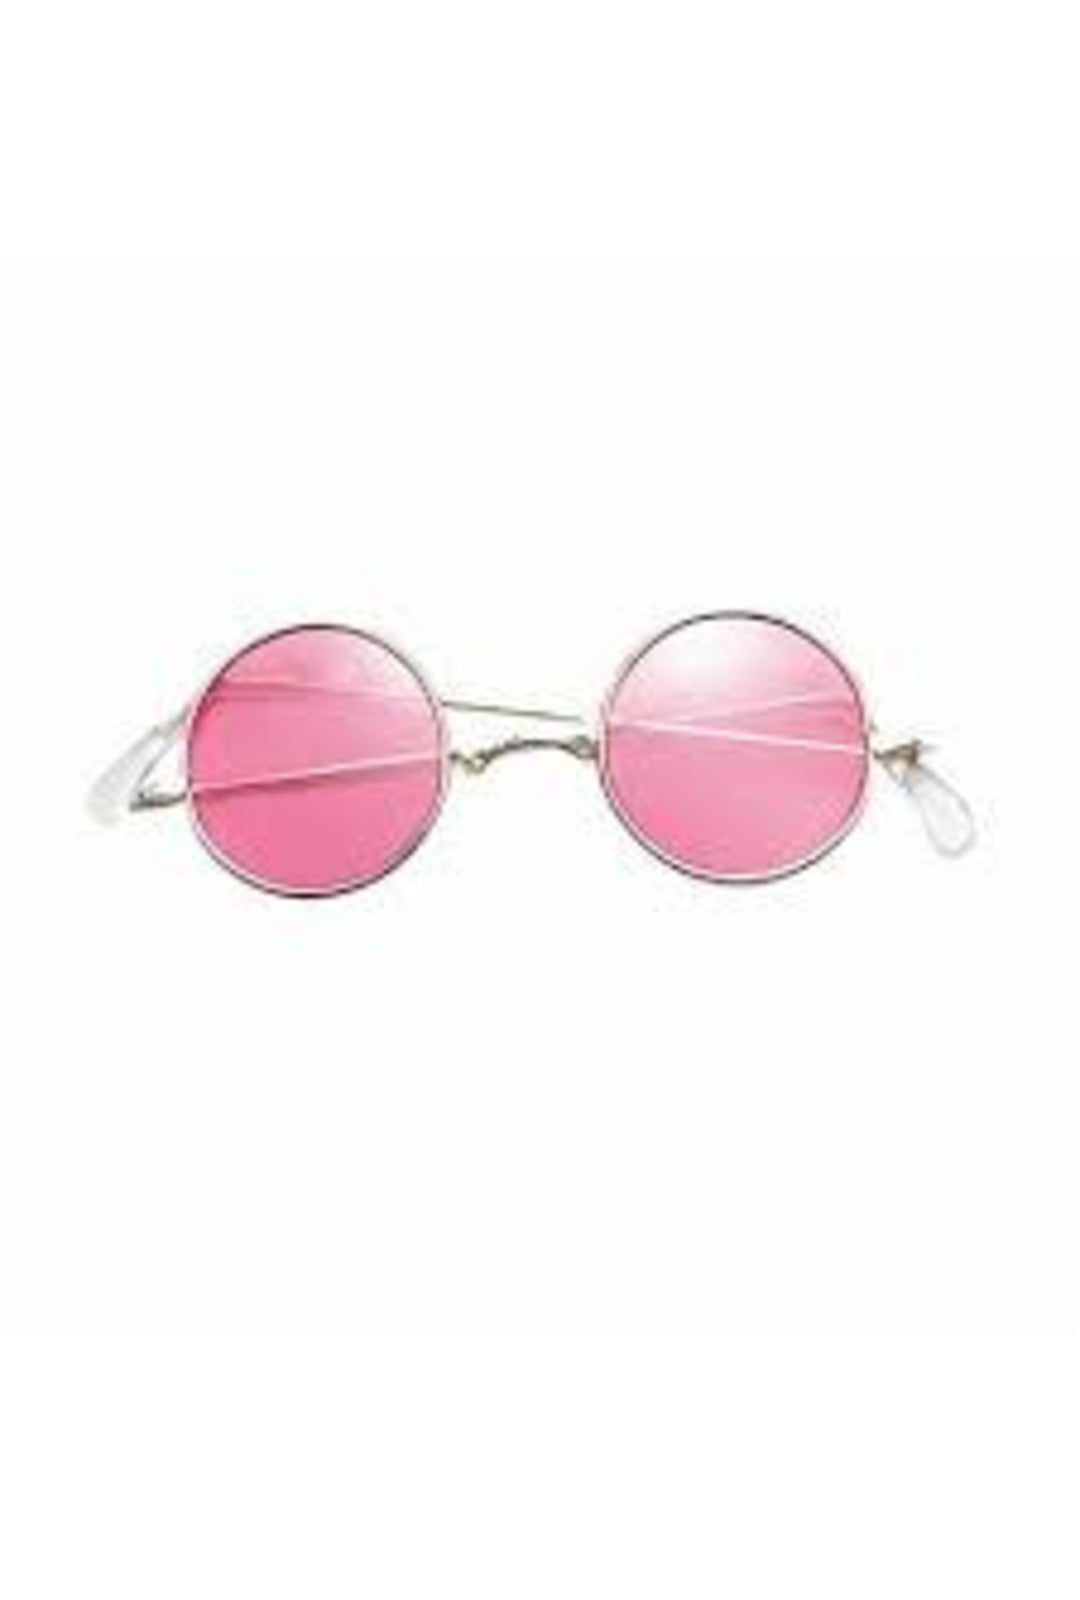 Hippy Circle Pink Glasses